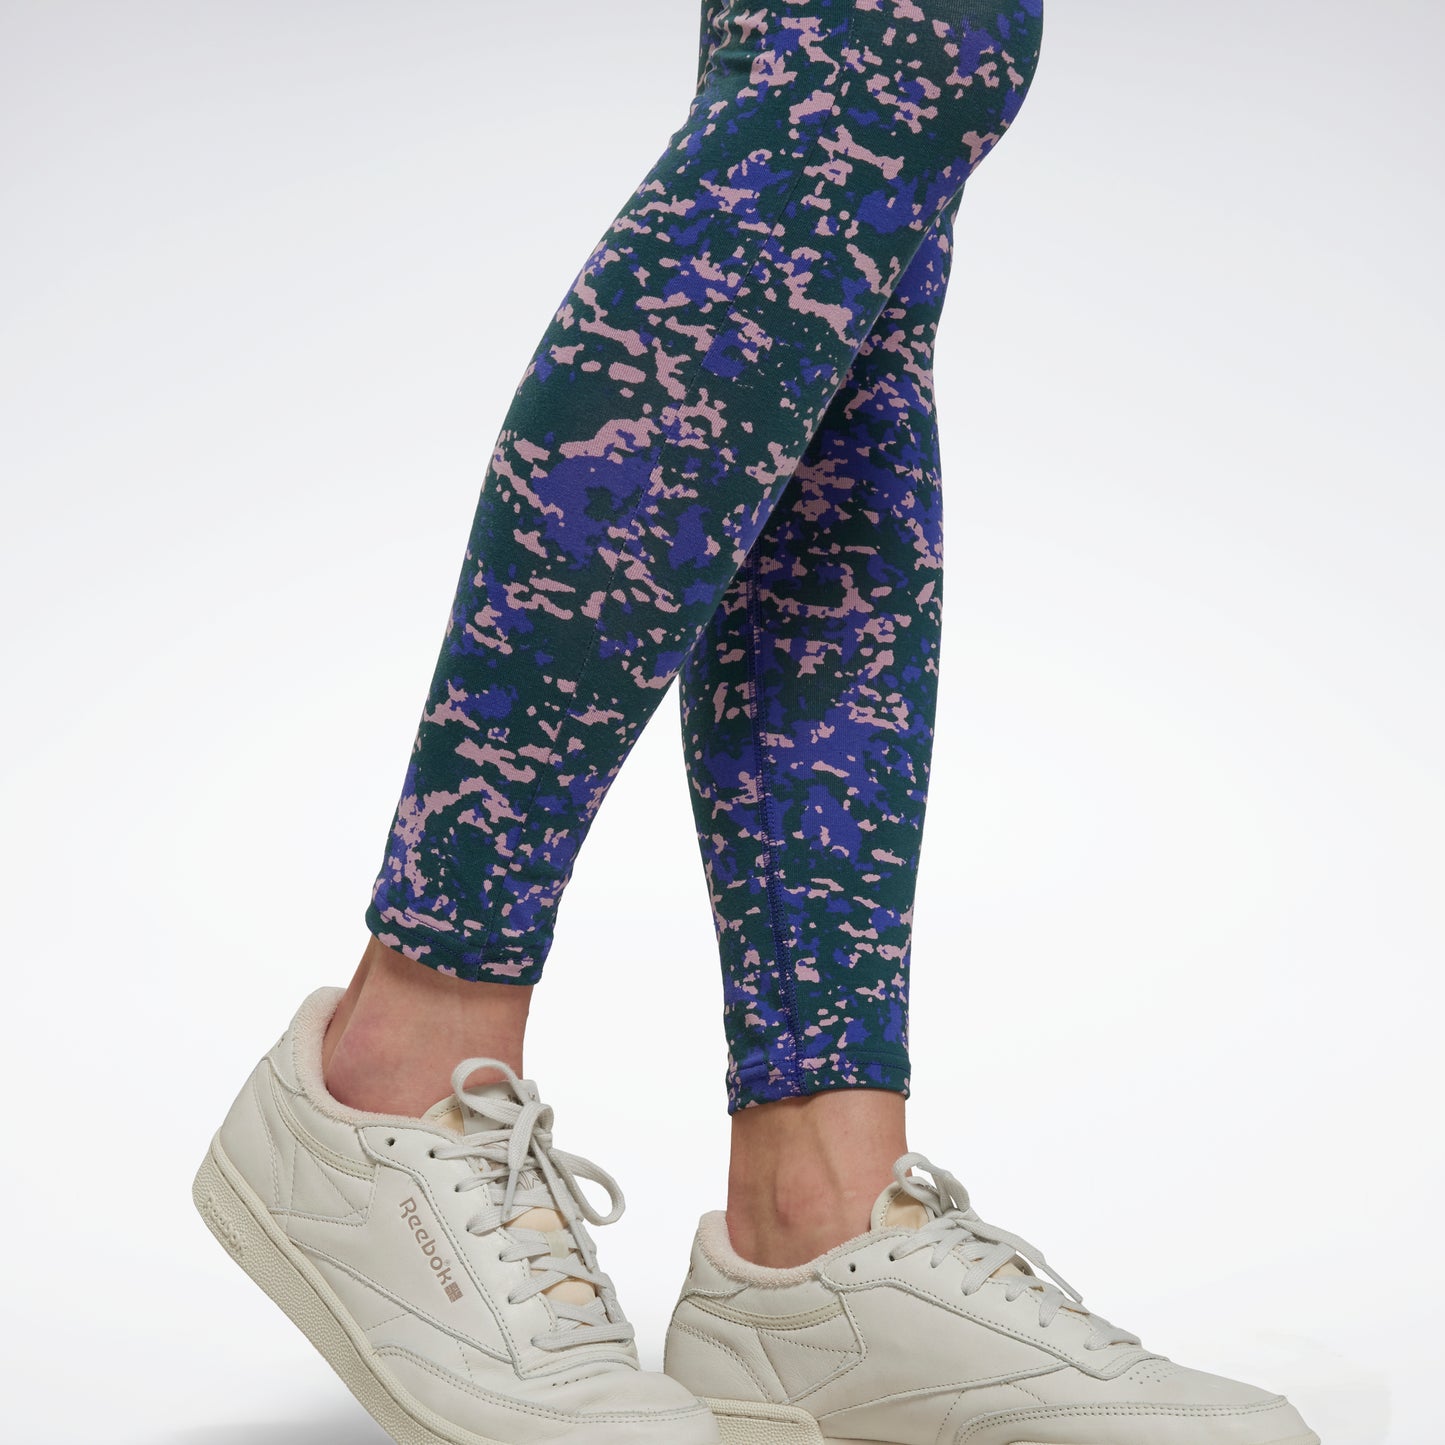 Floral print cotton leggings girl